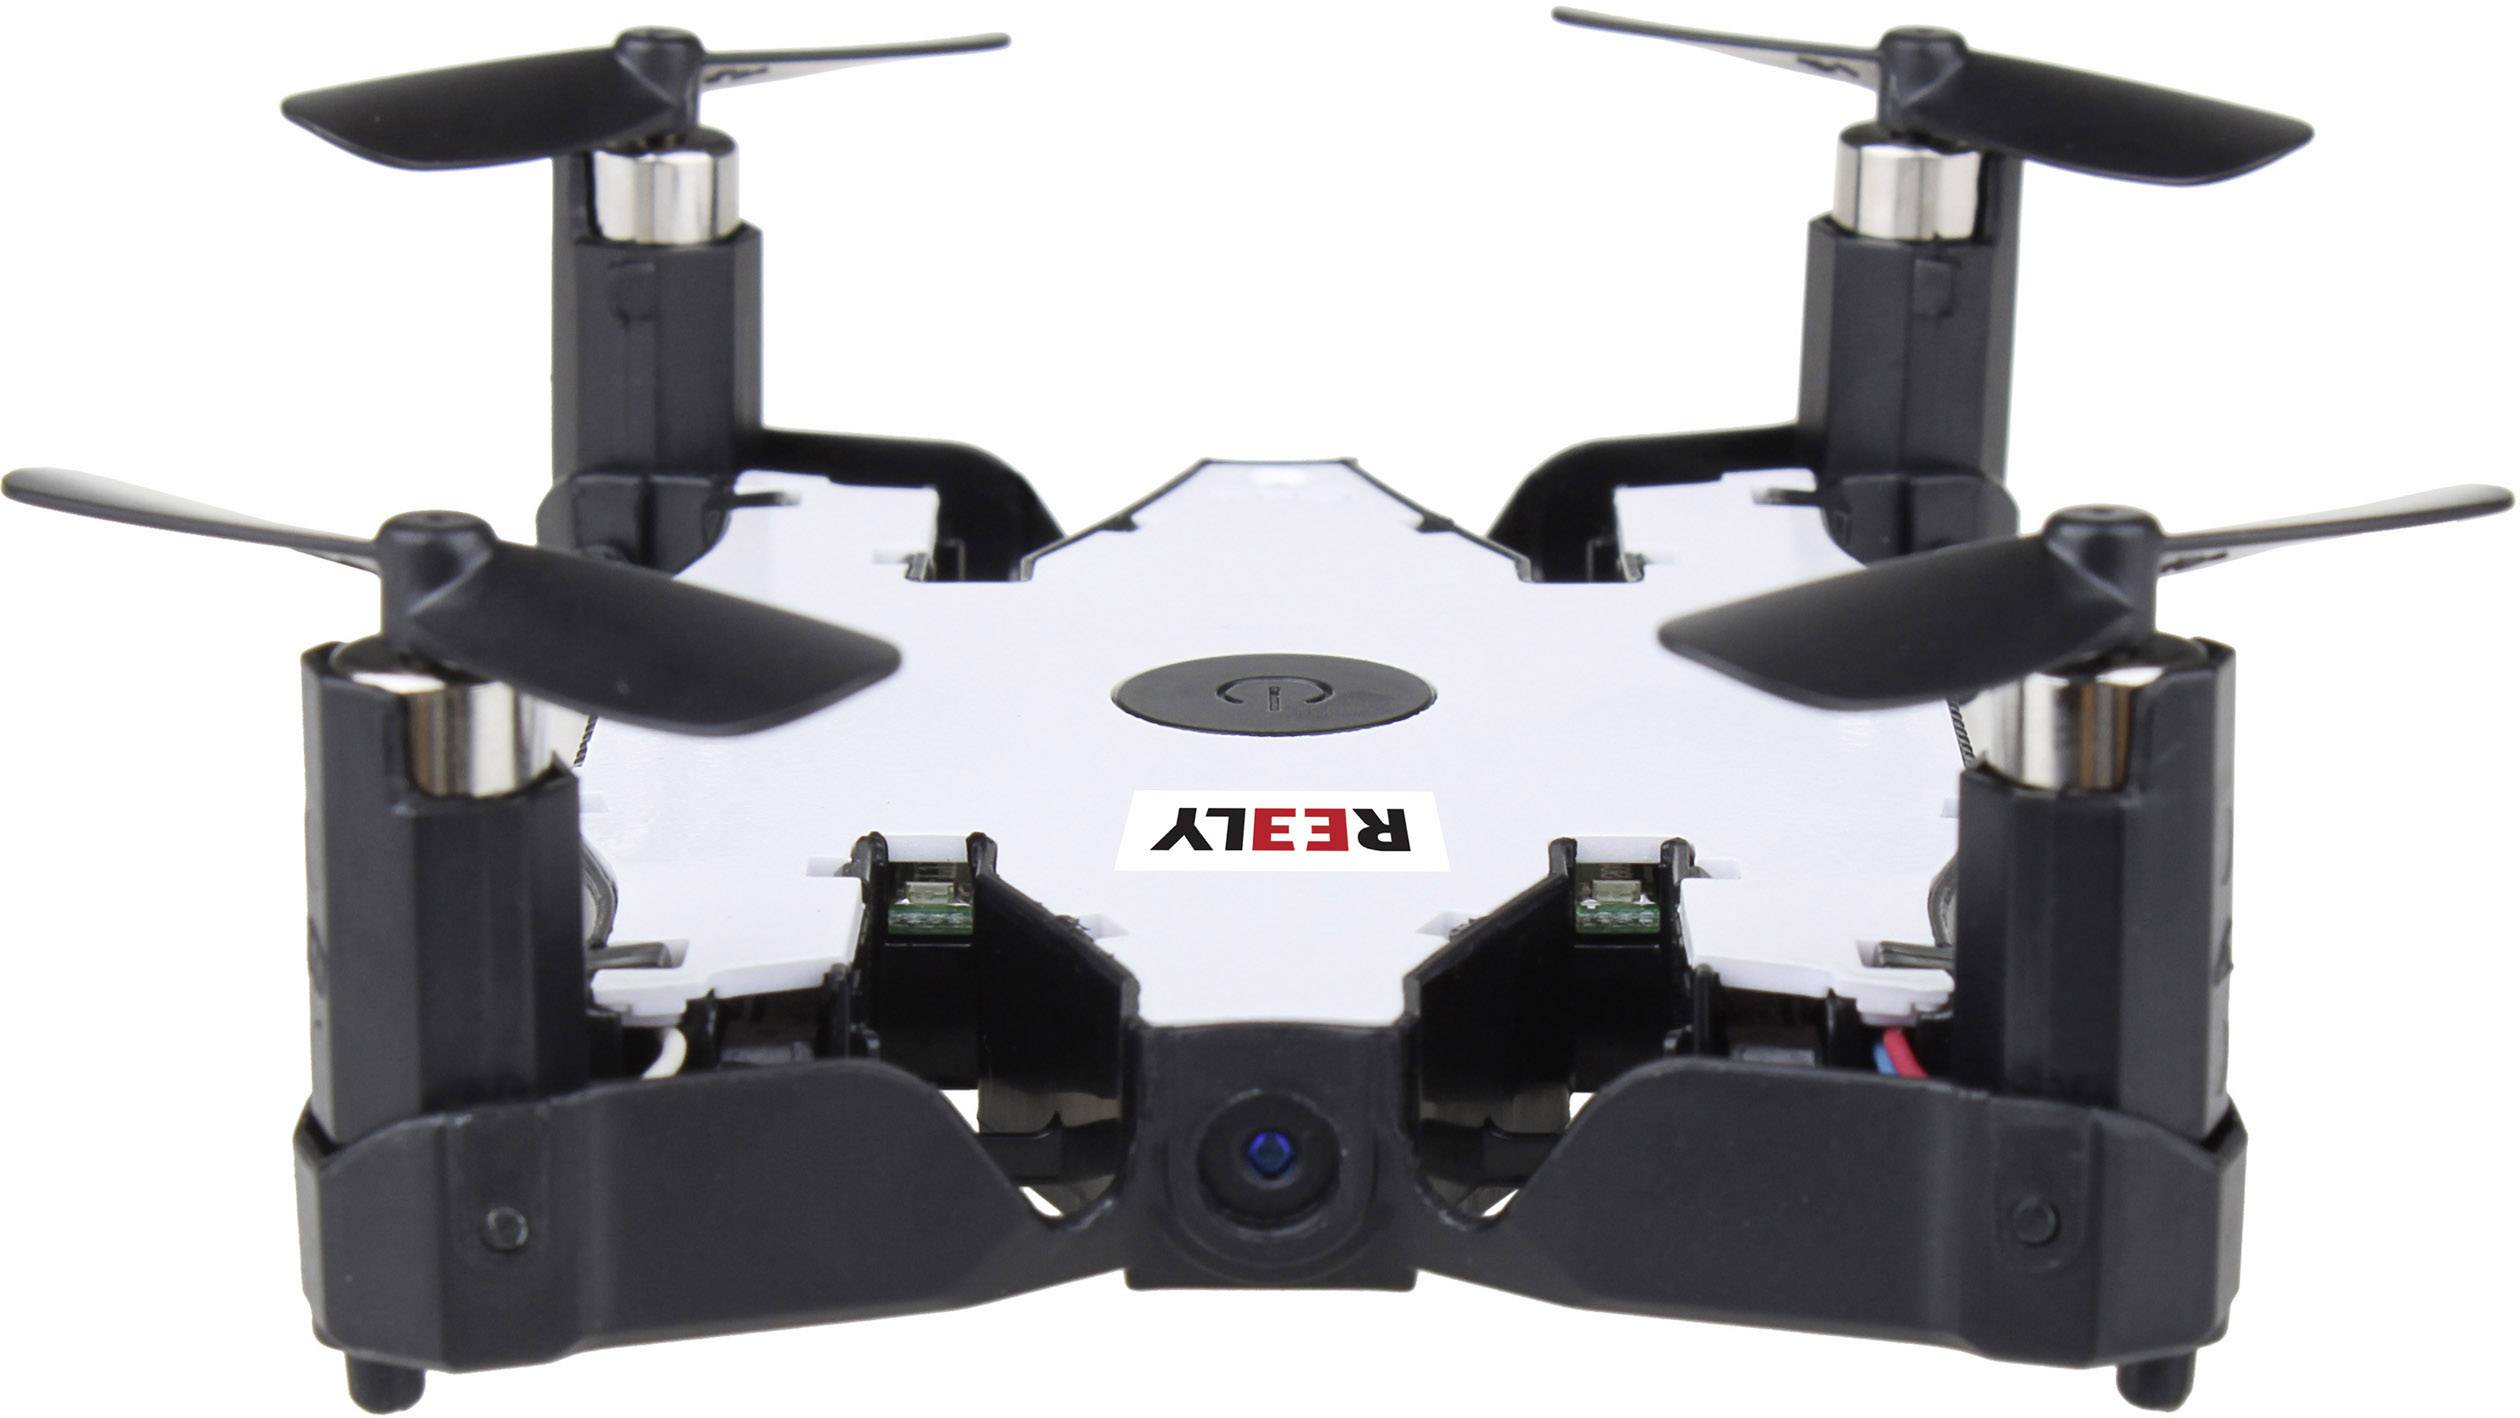 pocket drone with camera 4k